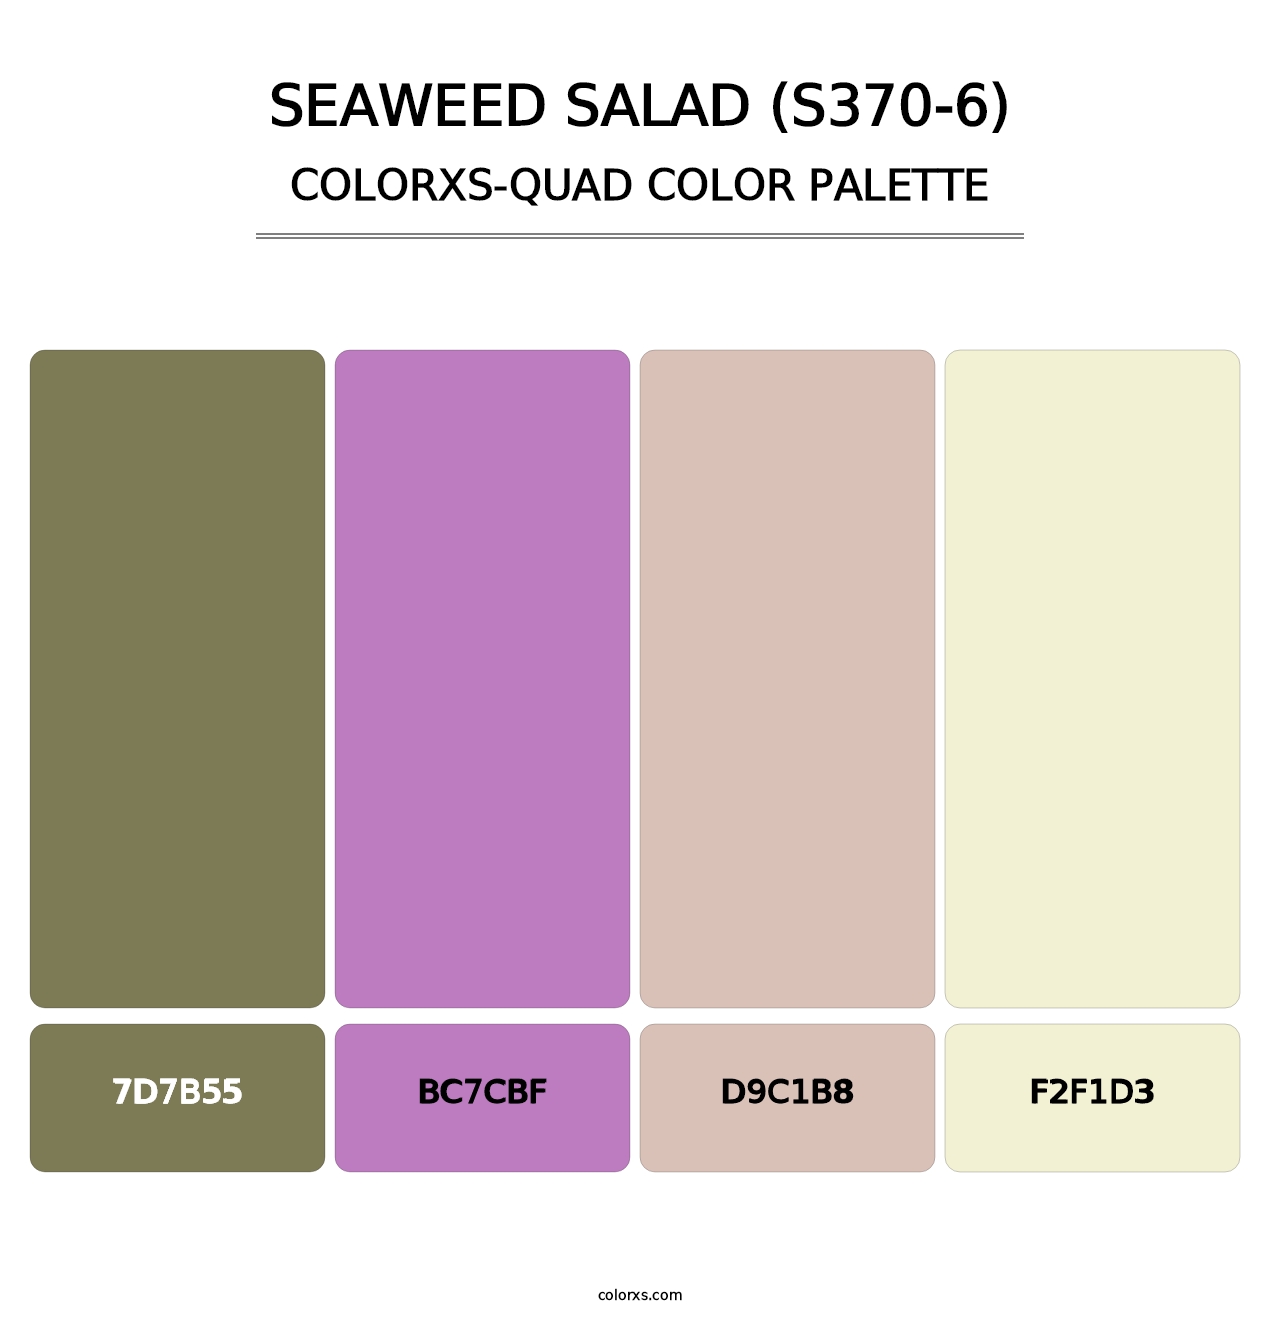 Seaweed Salad (S370-6) - Colorxs Quad Palette